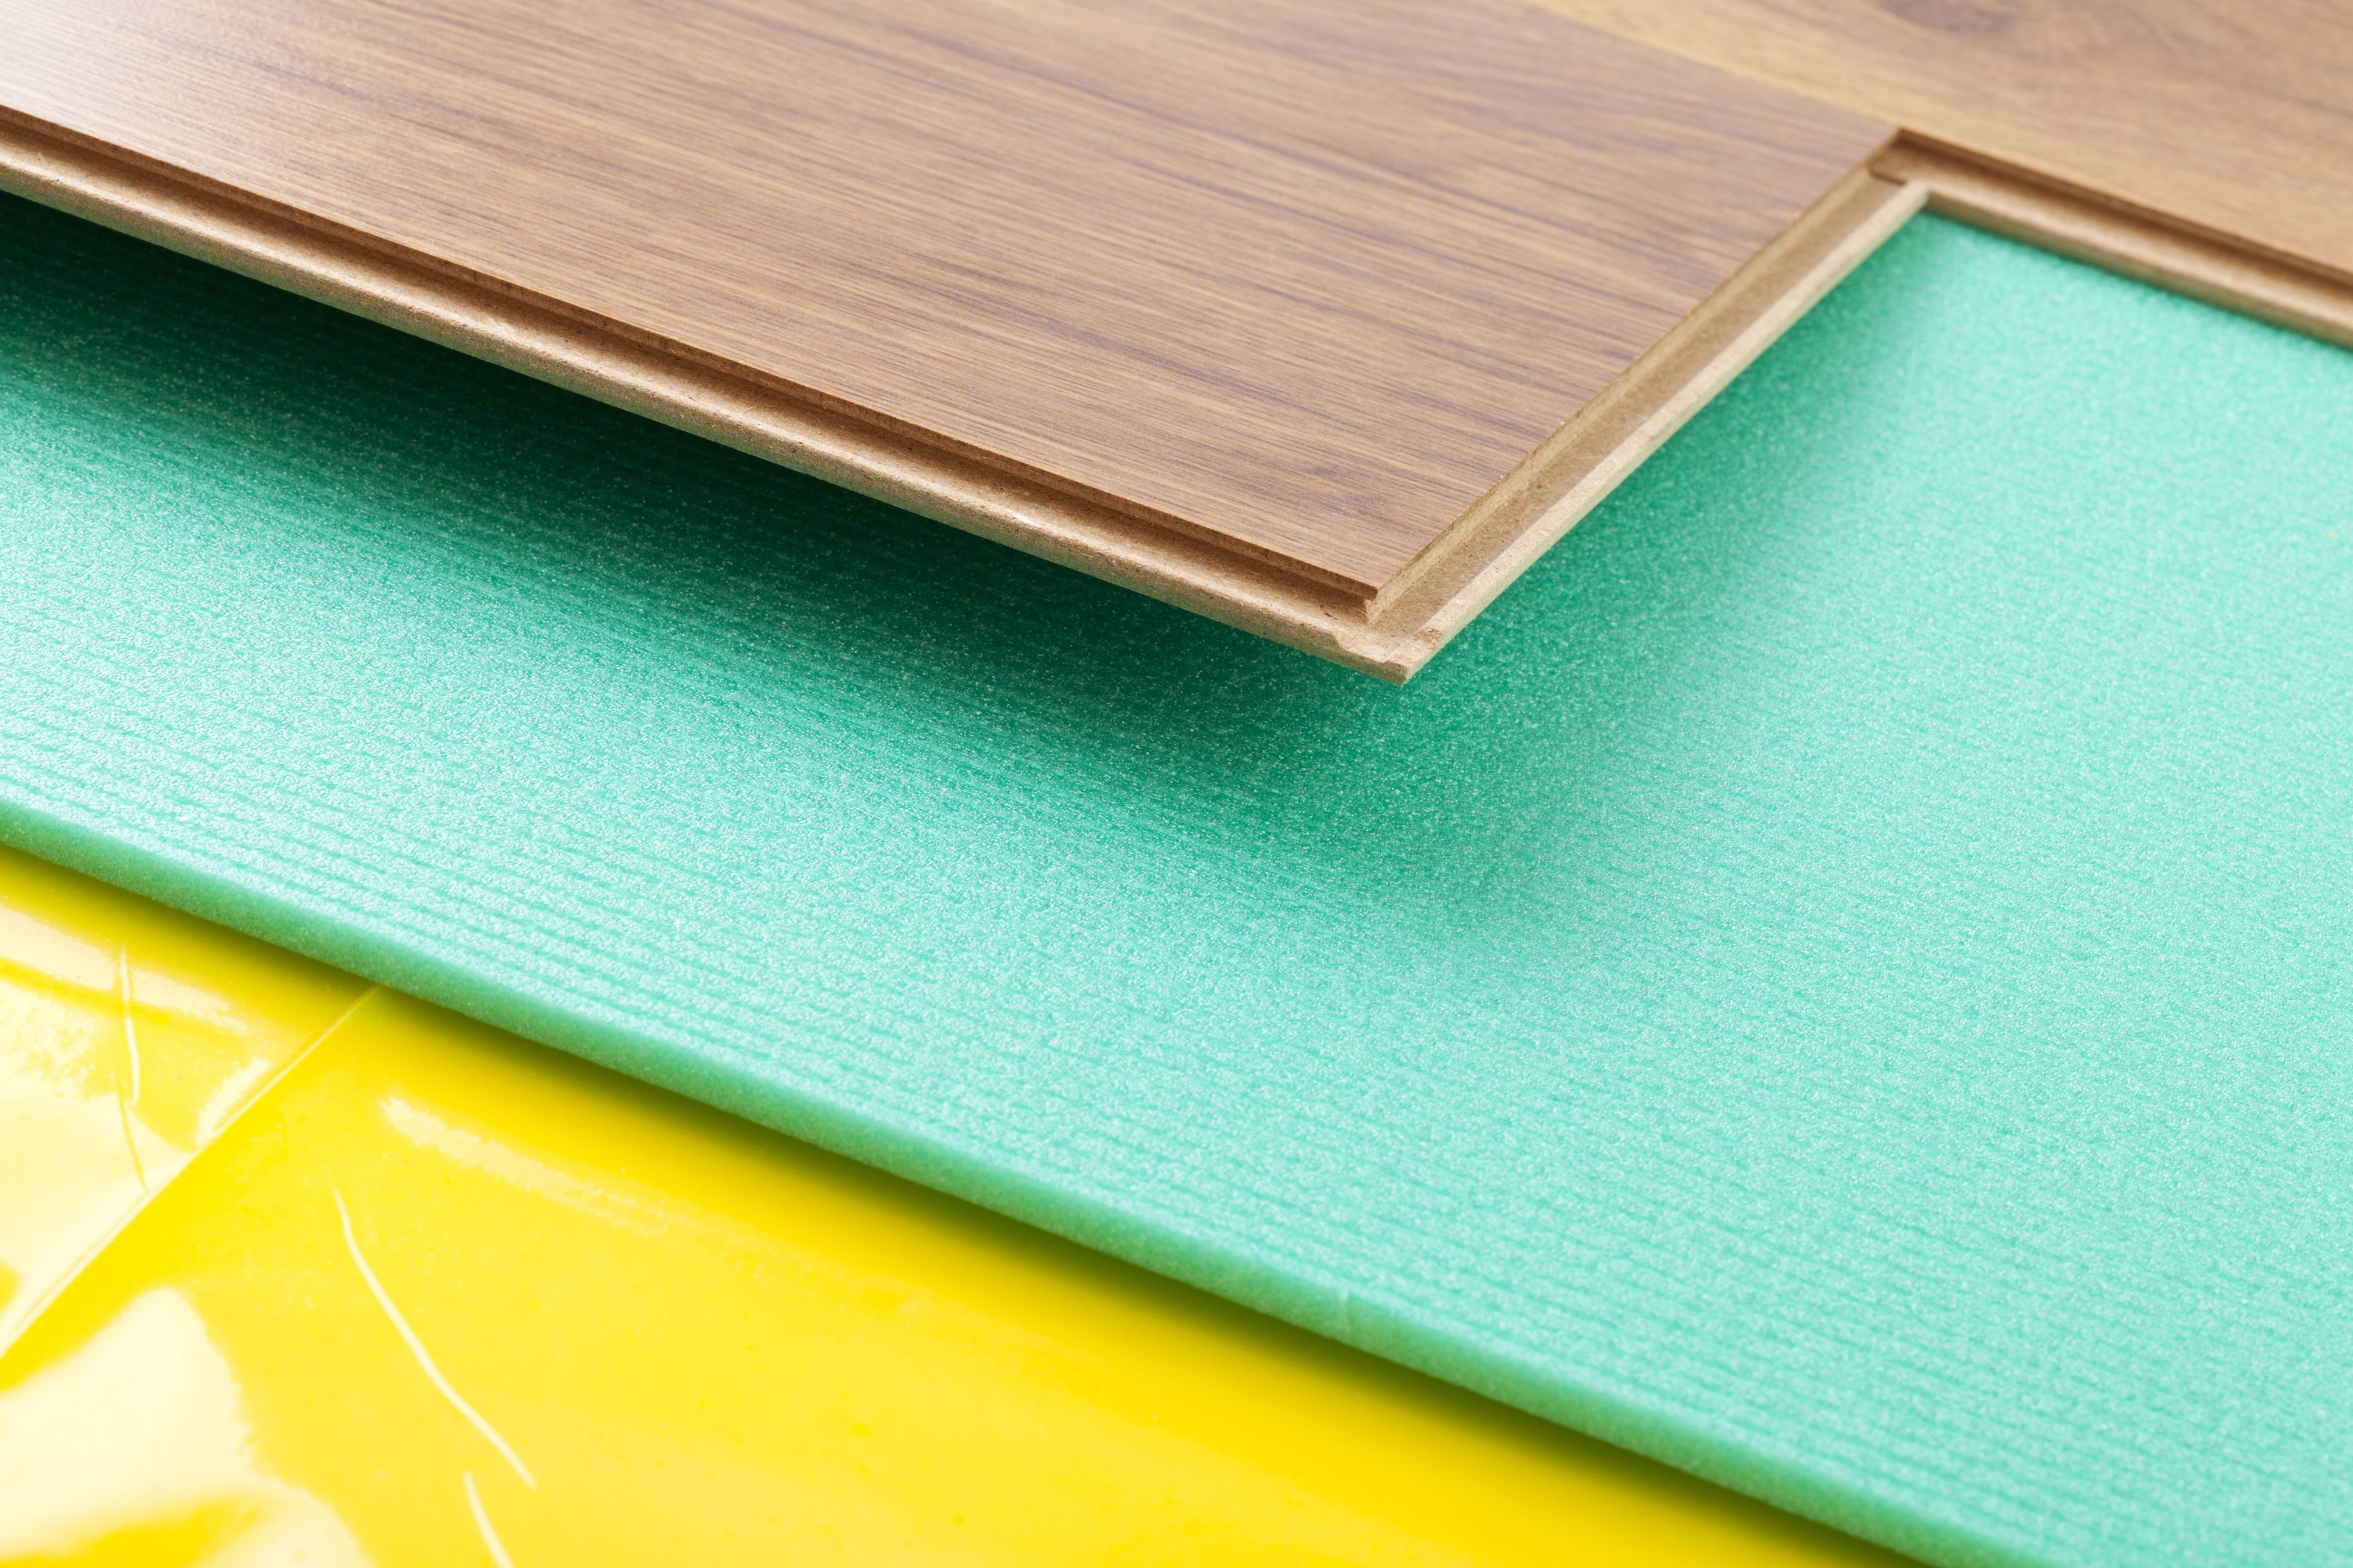 zep commercial hardwood laminate floor cleaner reviews of laminate flooring underlayment type to buy and basics regarding laying laminate flooring 170236773 58238ada3df78c6f6ad4bd8d